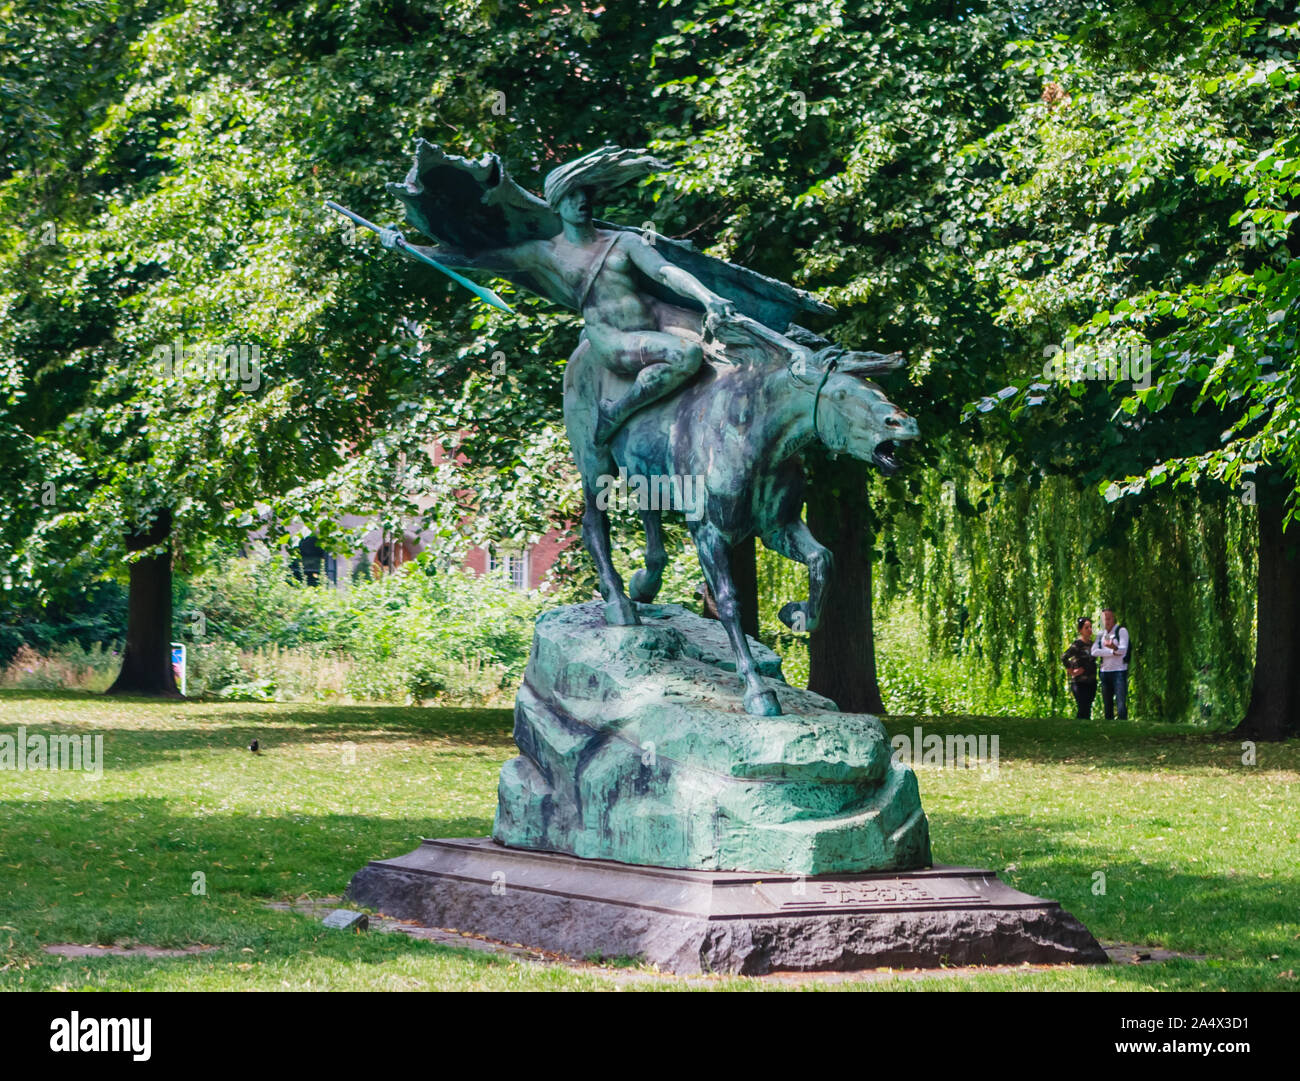 Bronze statue of a Valkyrie by Stephan Sinding in Churchillparken, a public park in Copenhagen, Denmark, Europe Stock Photo